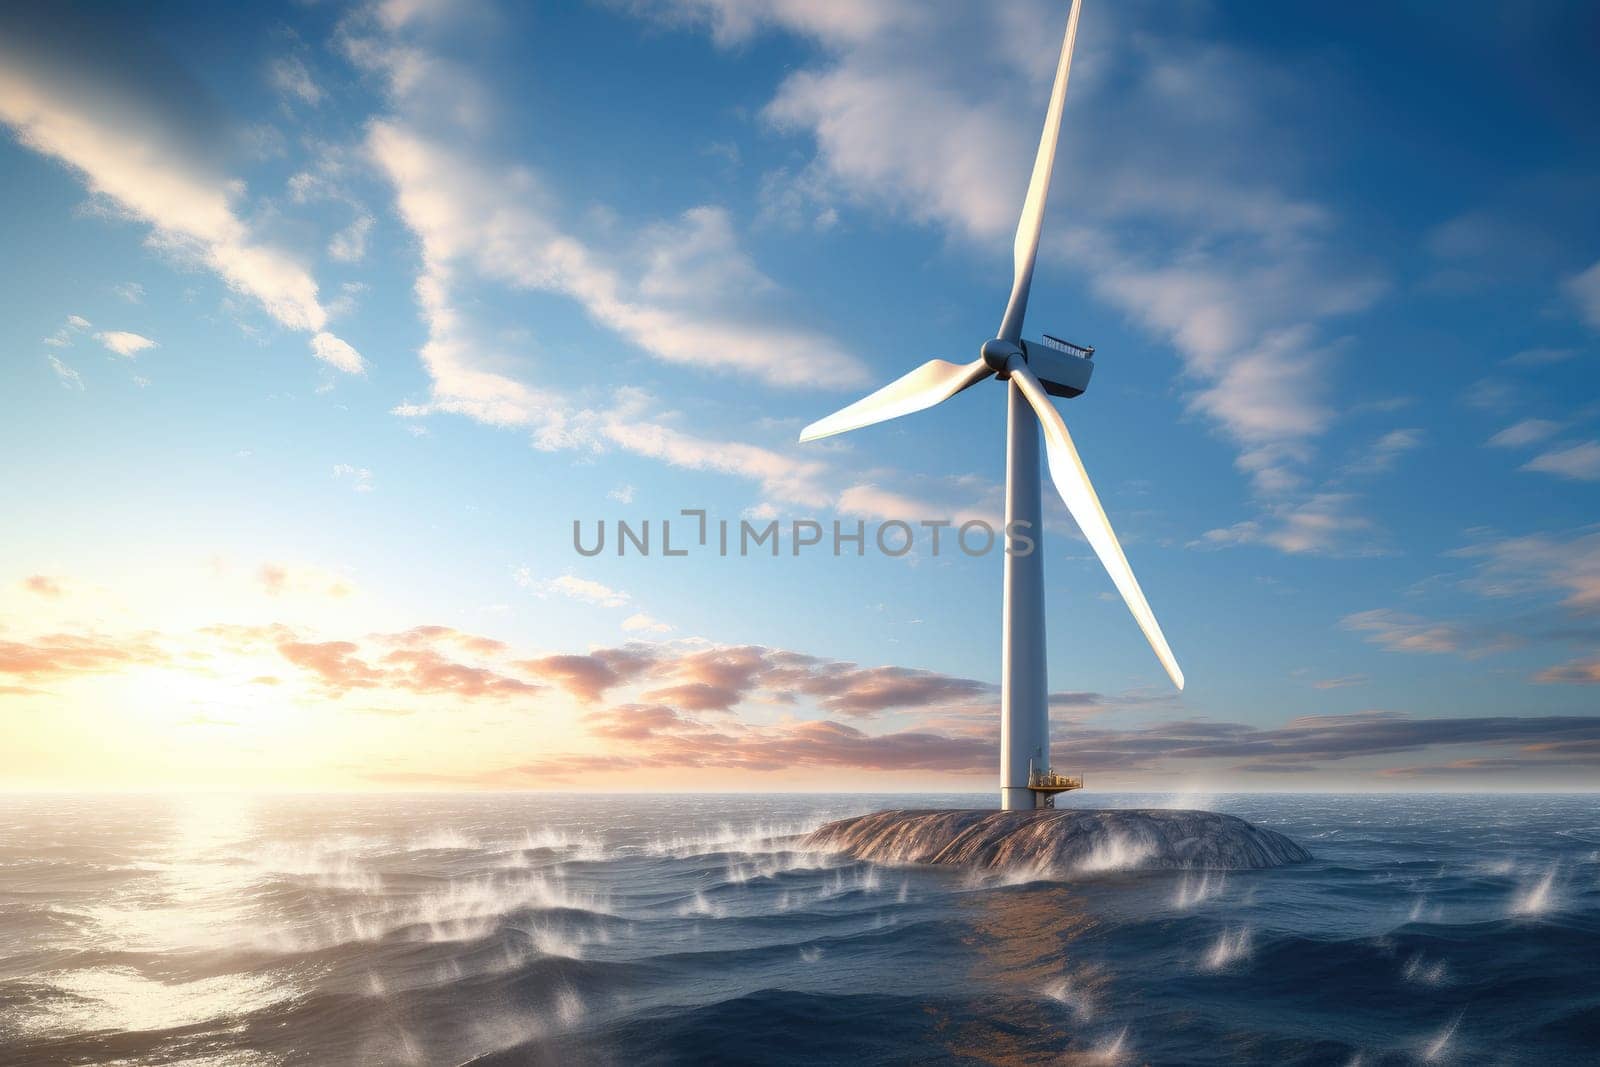 Dynamic Wind Turbine Generating Power in Motion with Clear Blue Sky in Renewable Energy Field by Yurich32